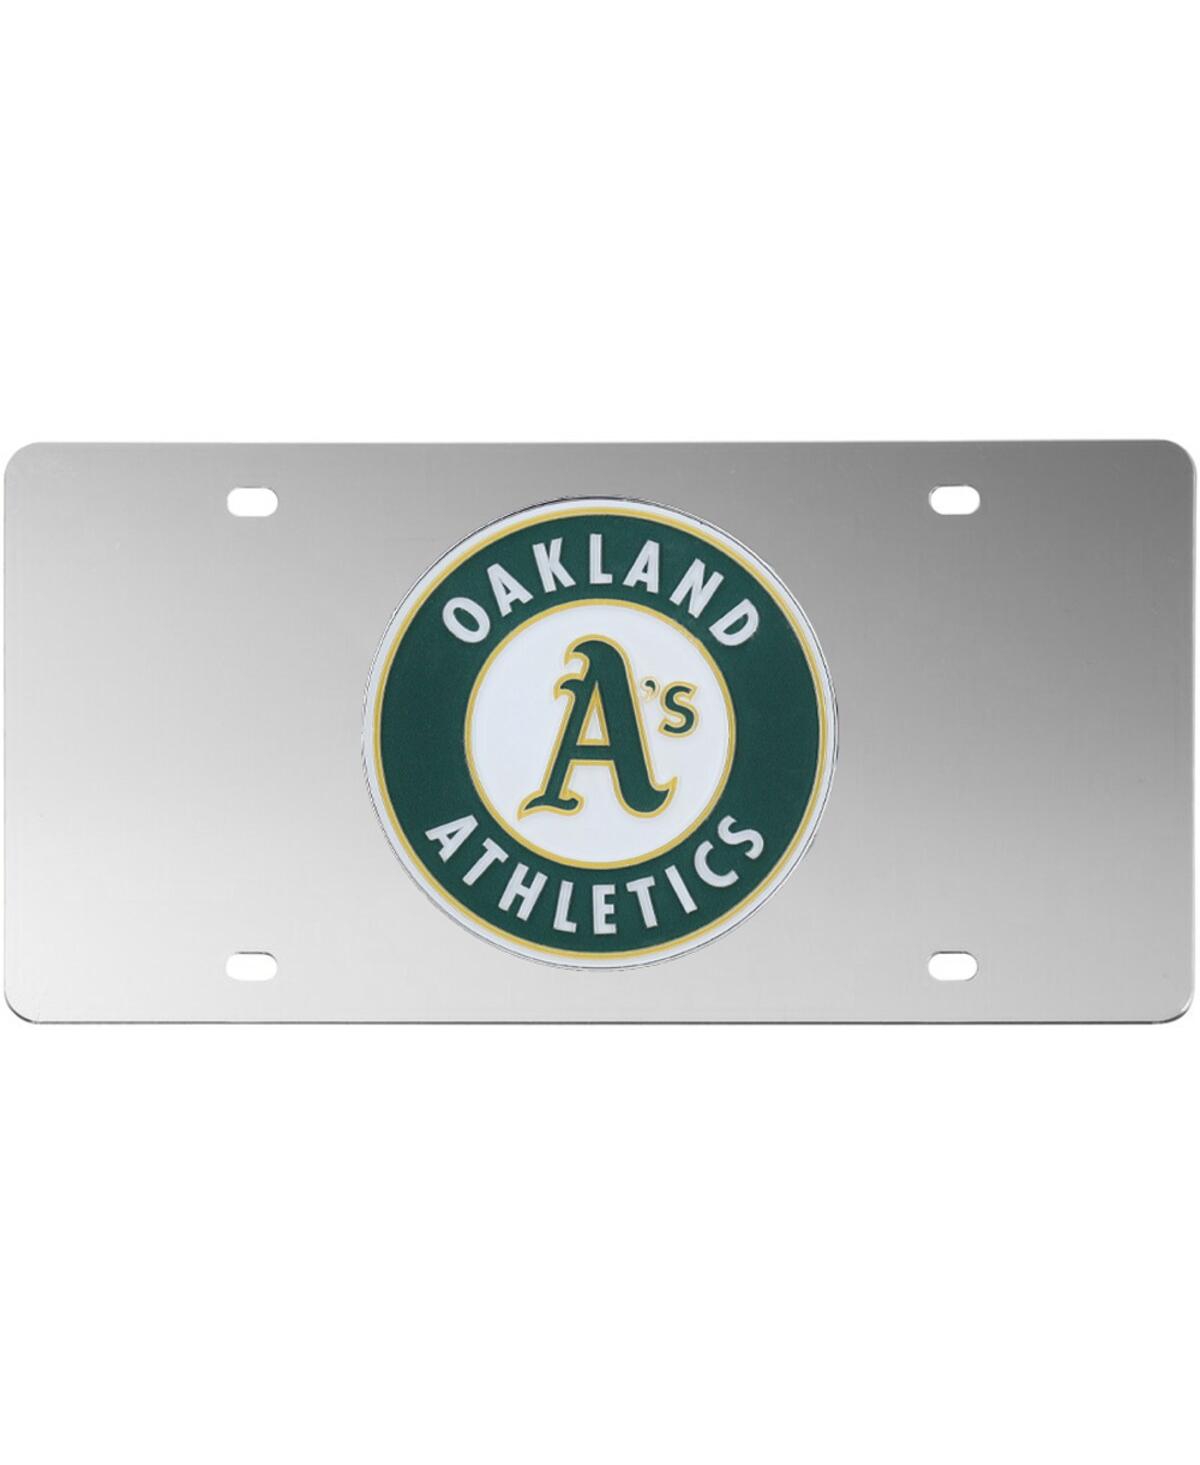 Oakland Athletics Team License Plate - Multi